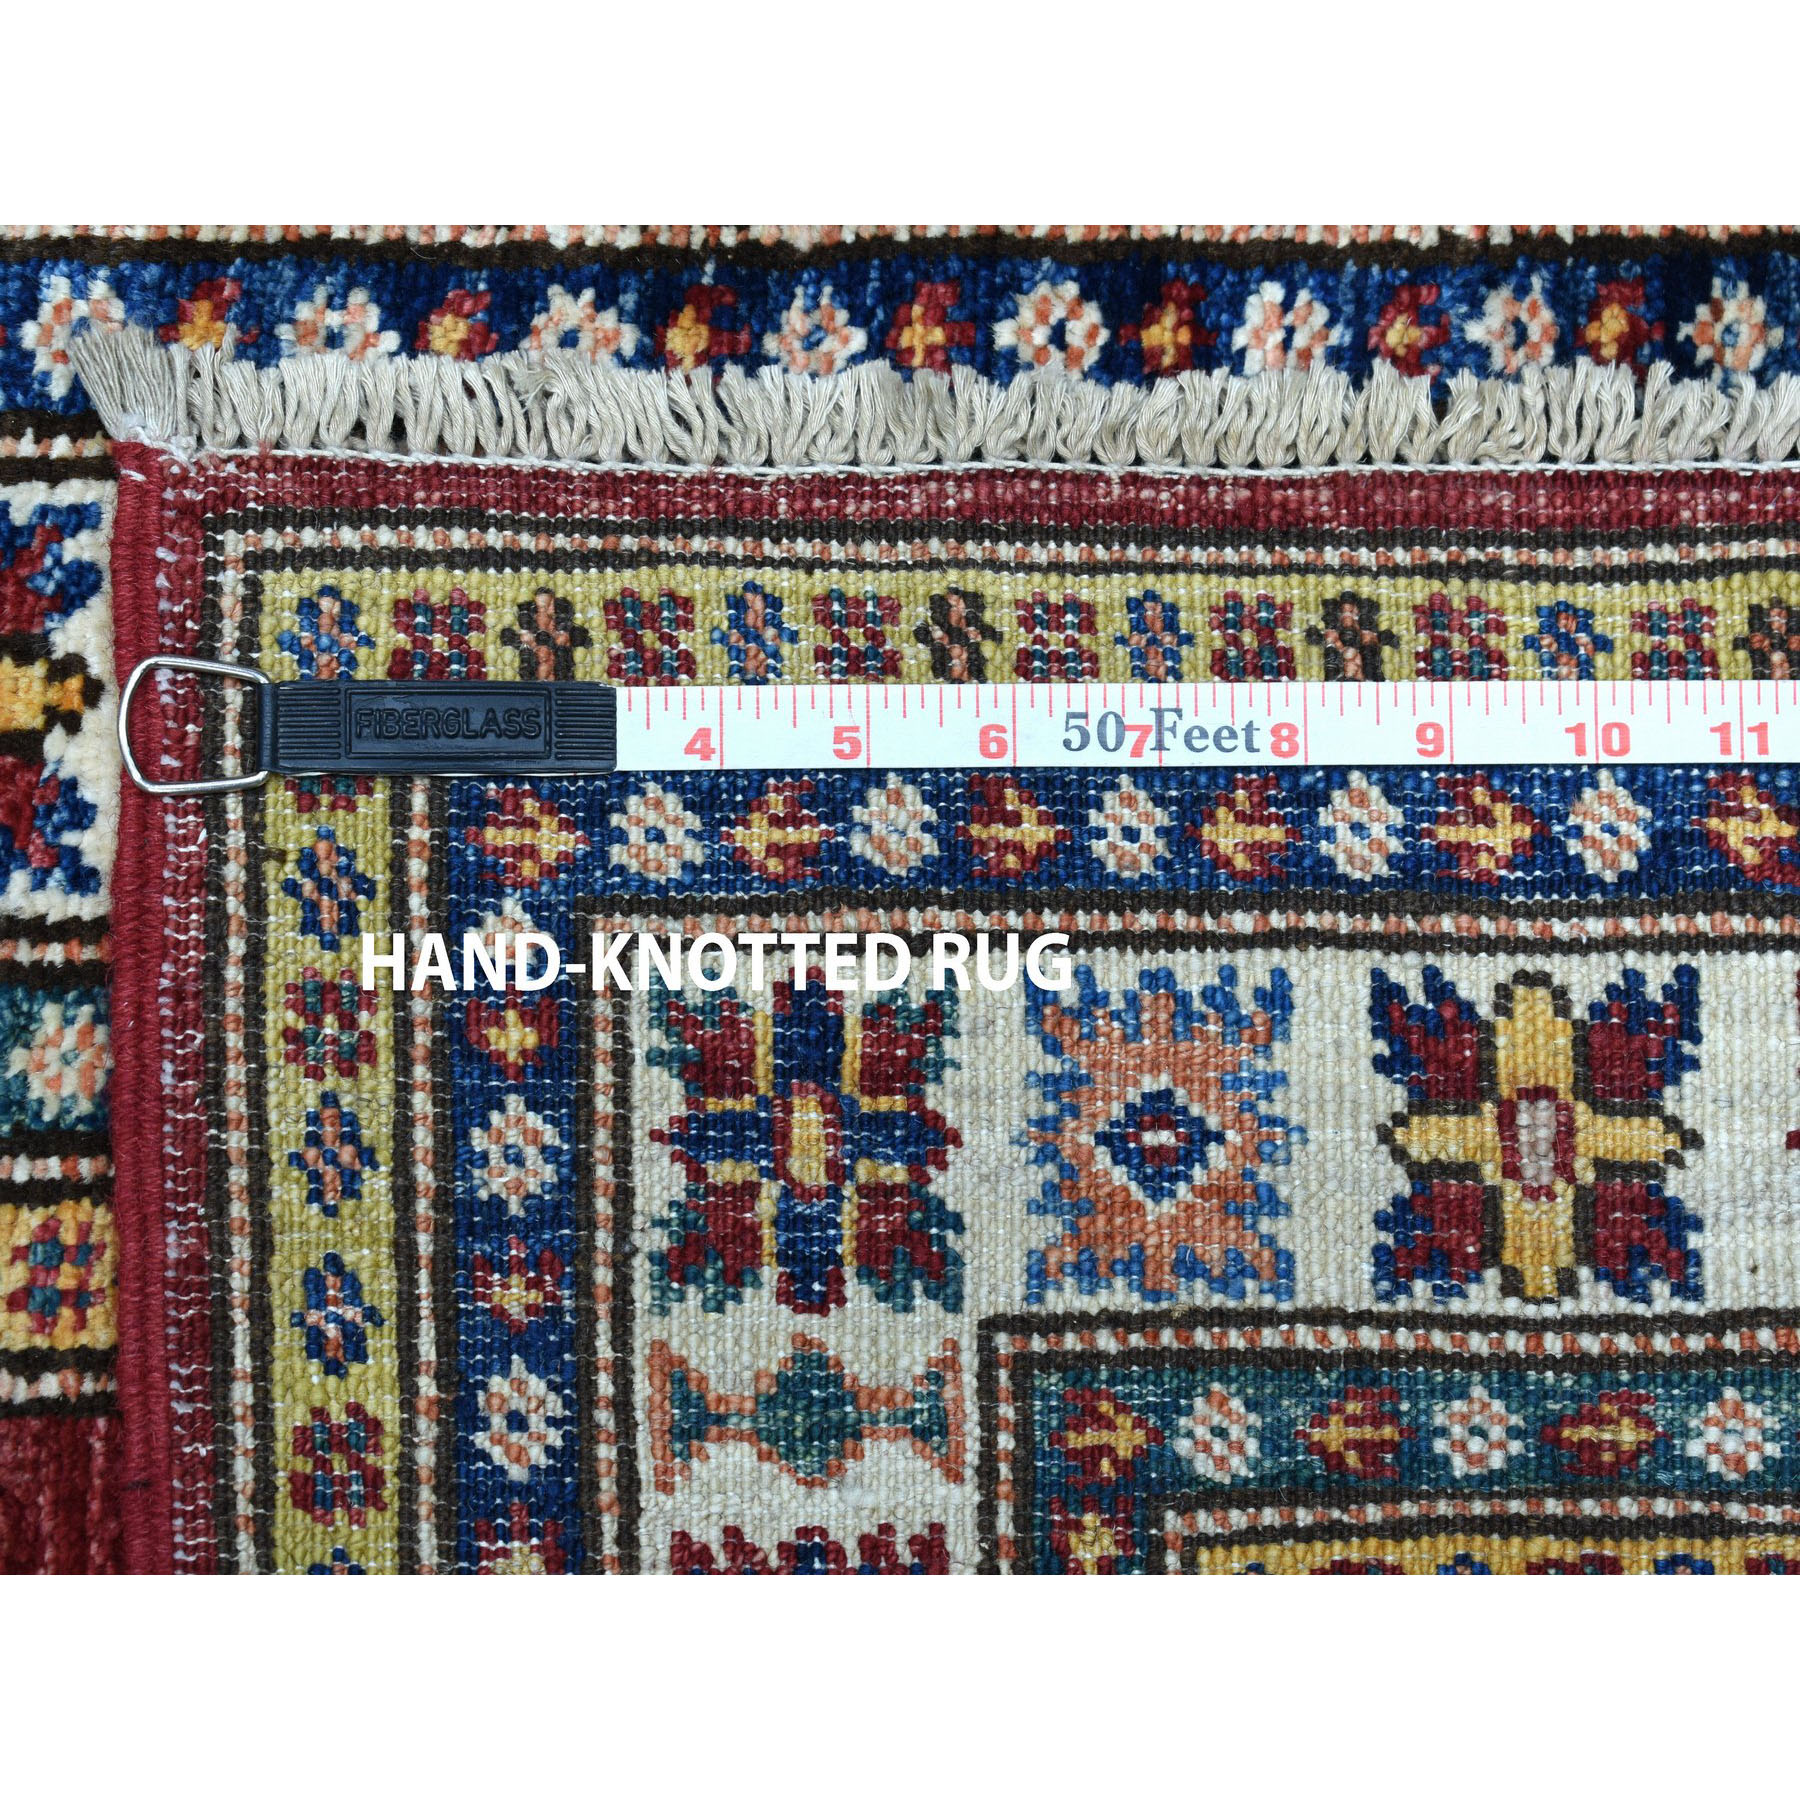 2-7 x20-1  Red Super Kazak Pure Wool Geometric Design XL Runner Hand-Knotted Oriental Rug 